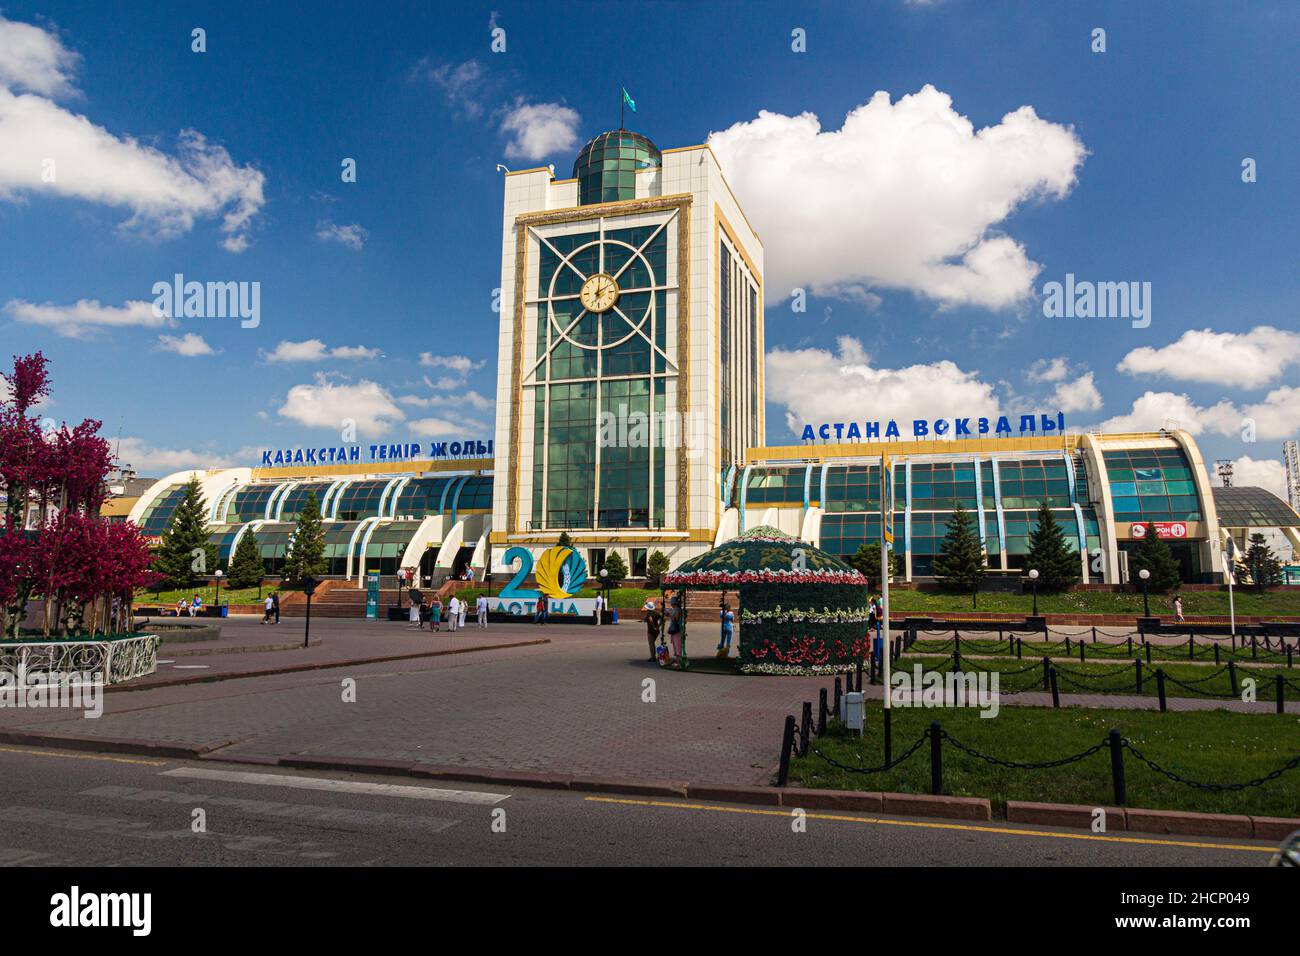 ASTANA, KAZAKHSTAN - JULY 8, 2018: View of the railway station Astana in Astana now Nur-Sultan , capital of Kazakhstan Stock Photo